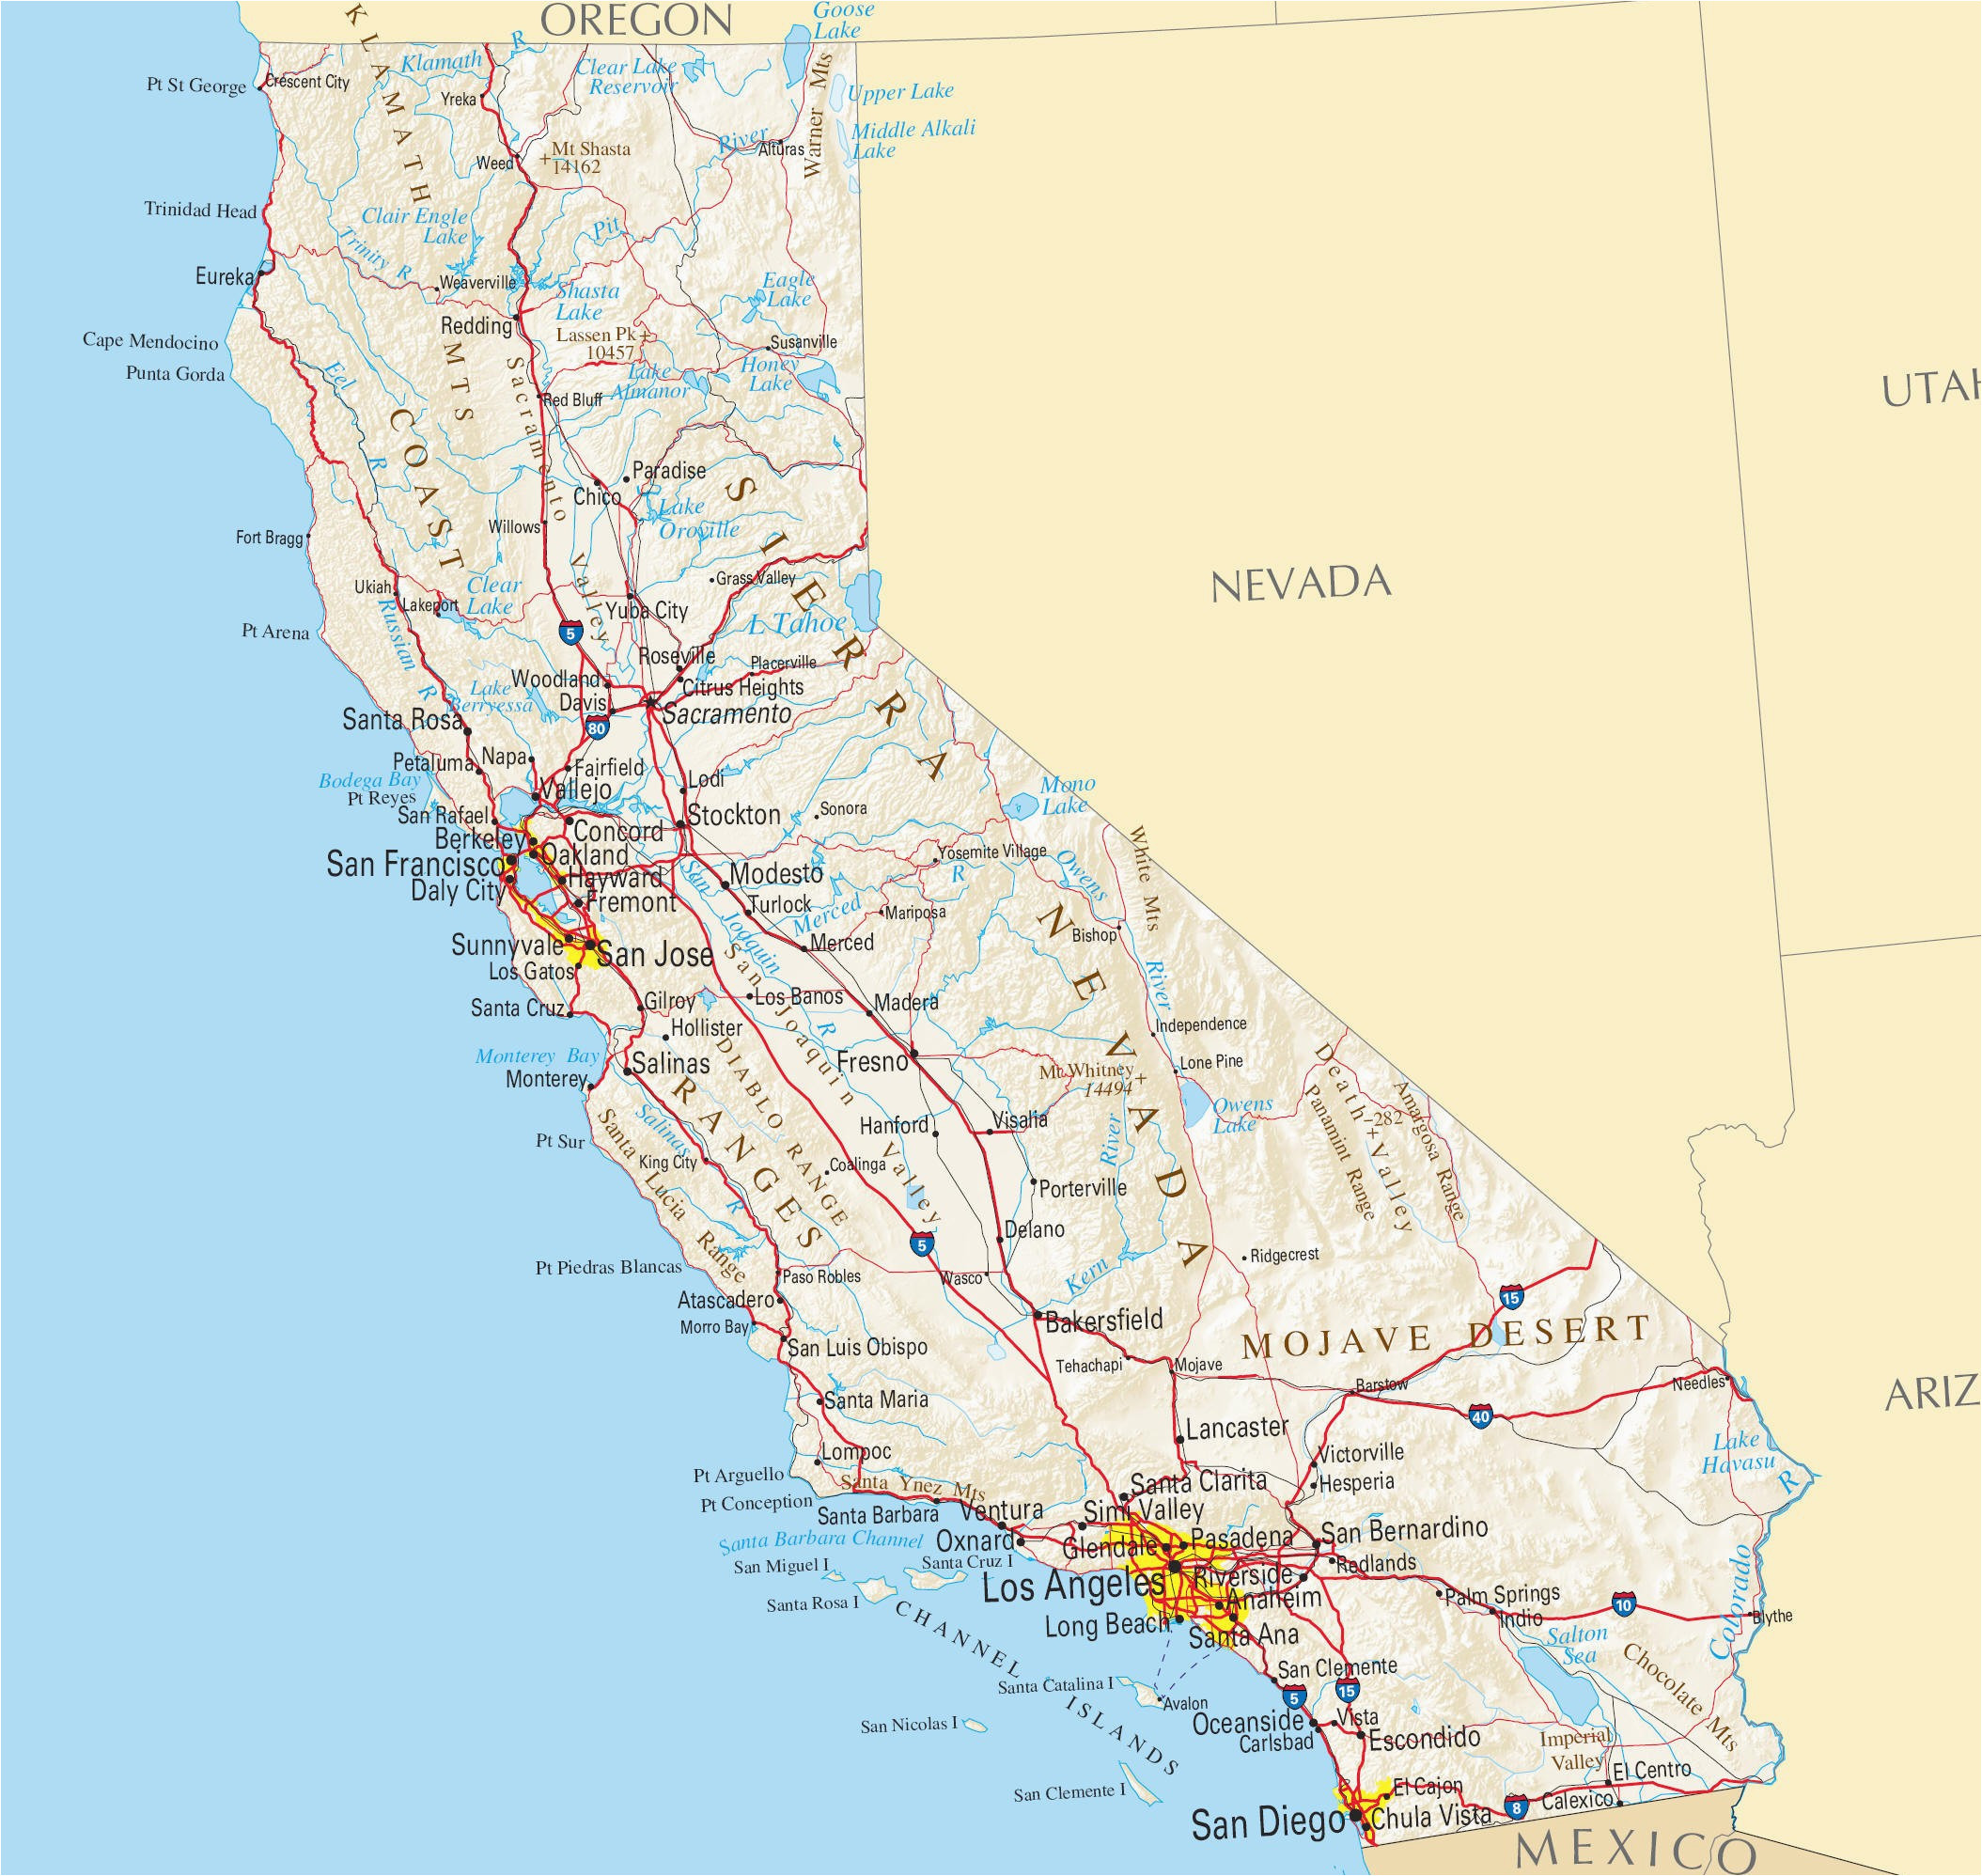 santa barbara on map of california massivegroove com